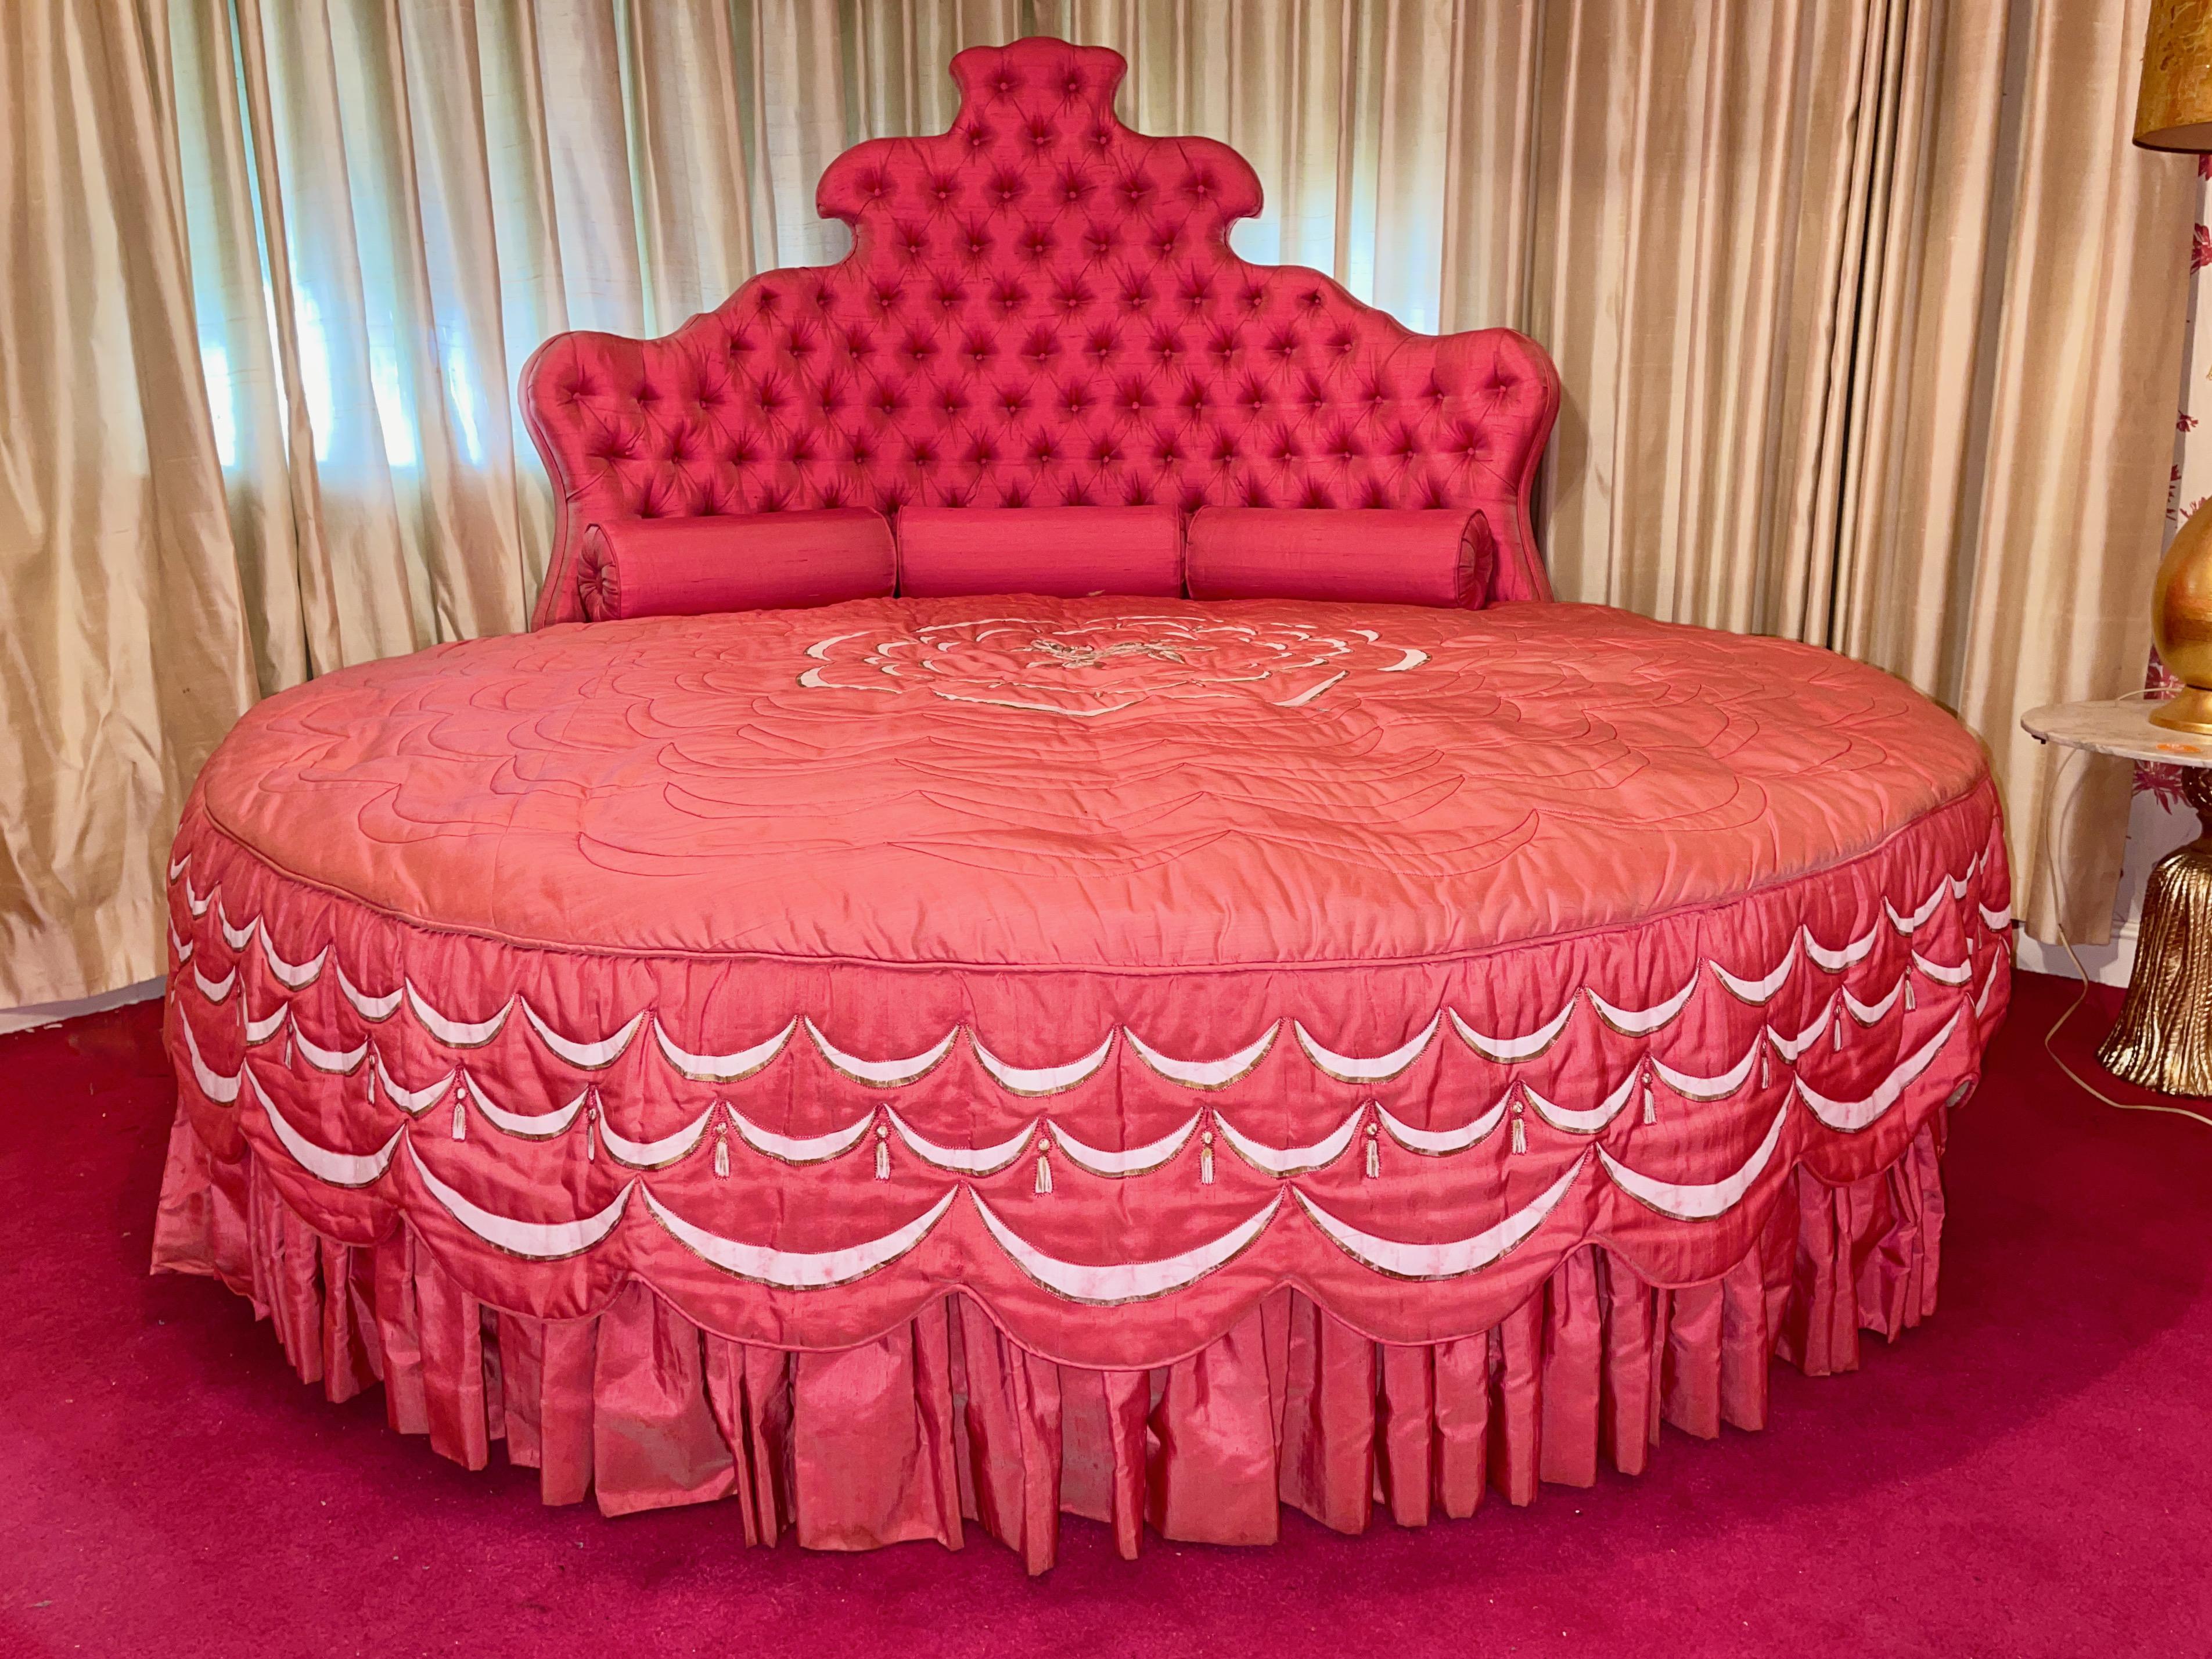 Upholstery Vintage Hollywood Regency Round Bed